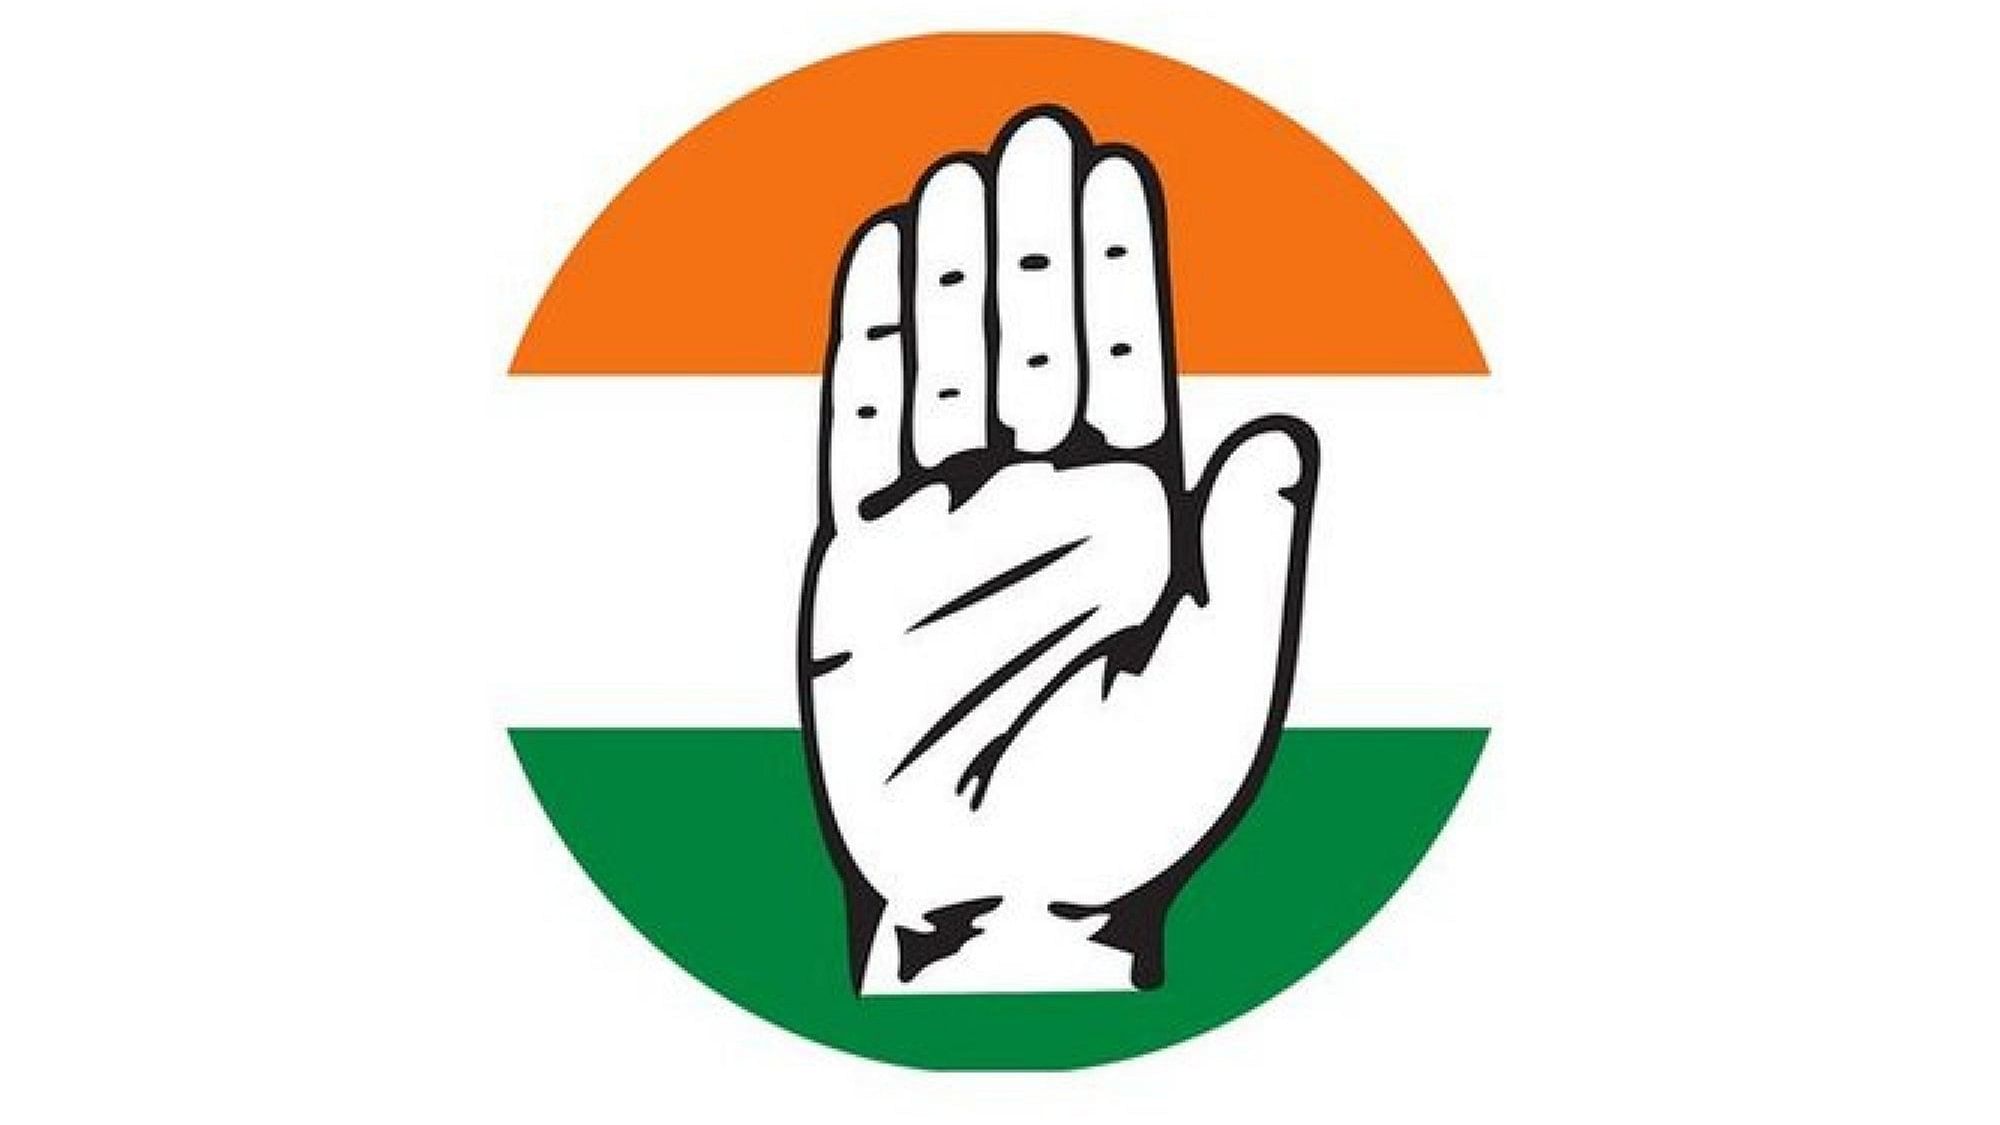 Congress party logo (File Image)